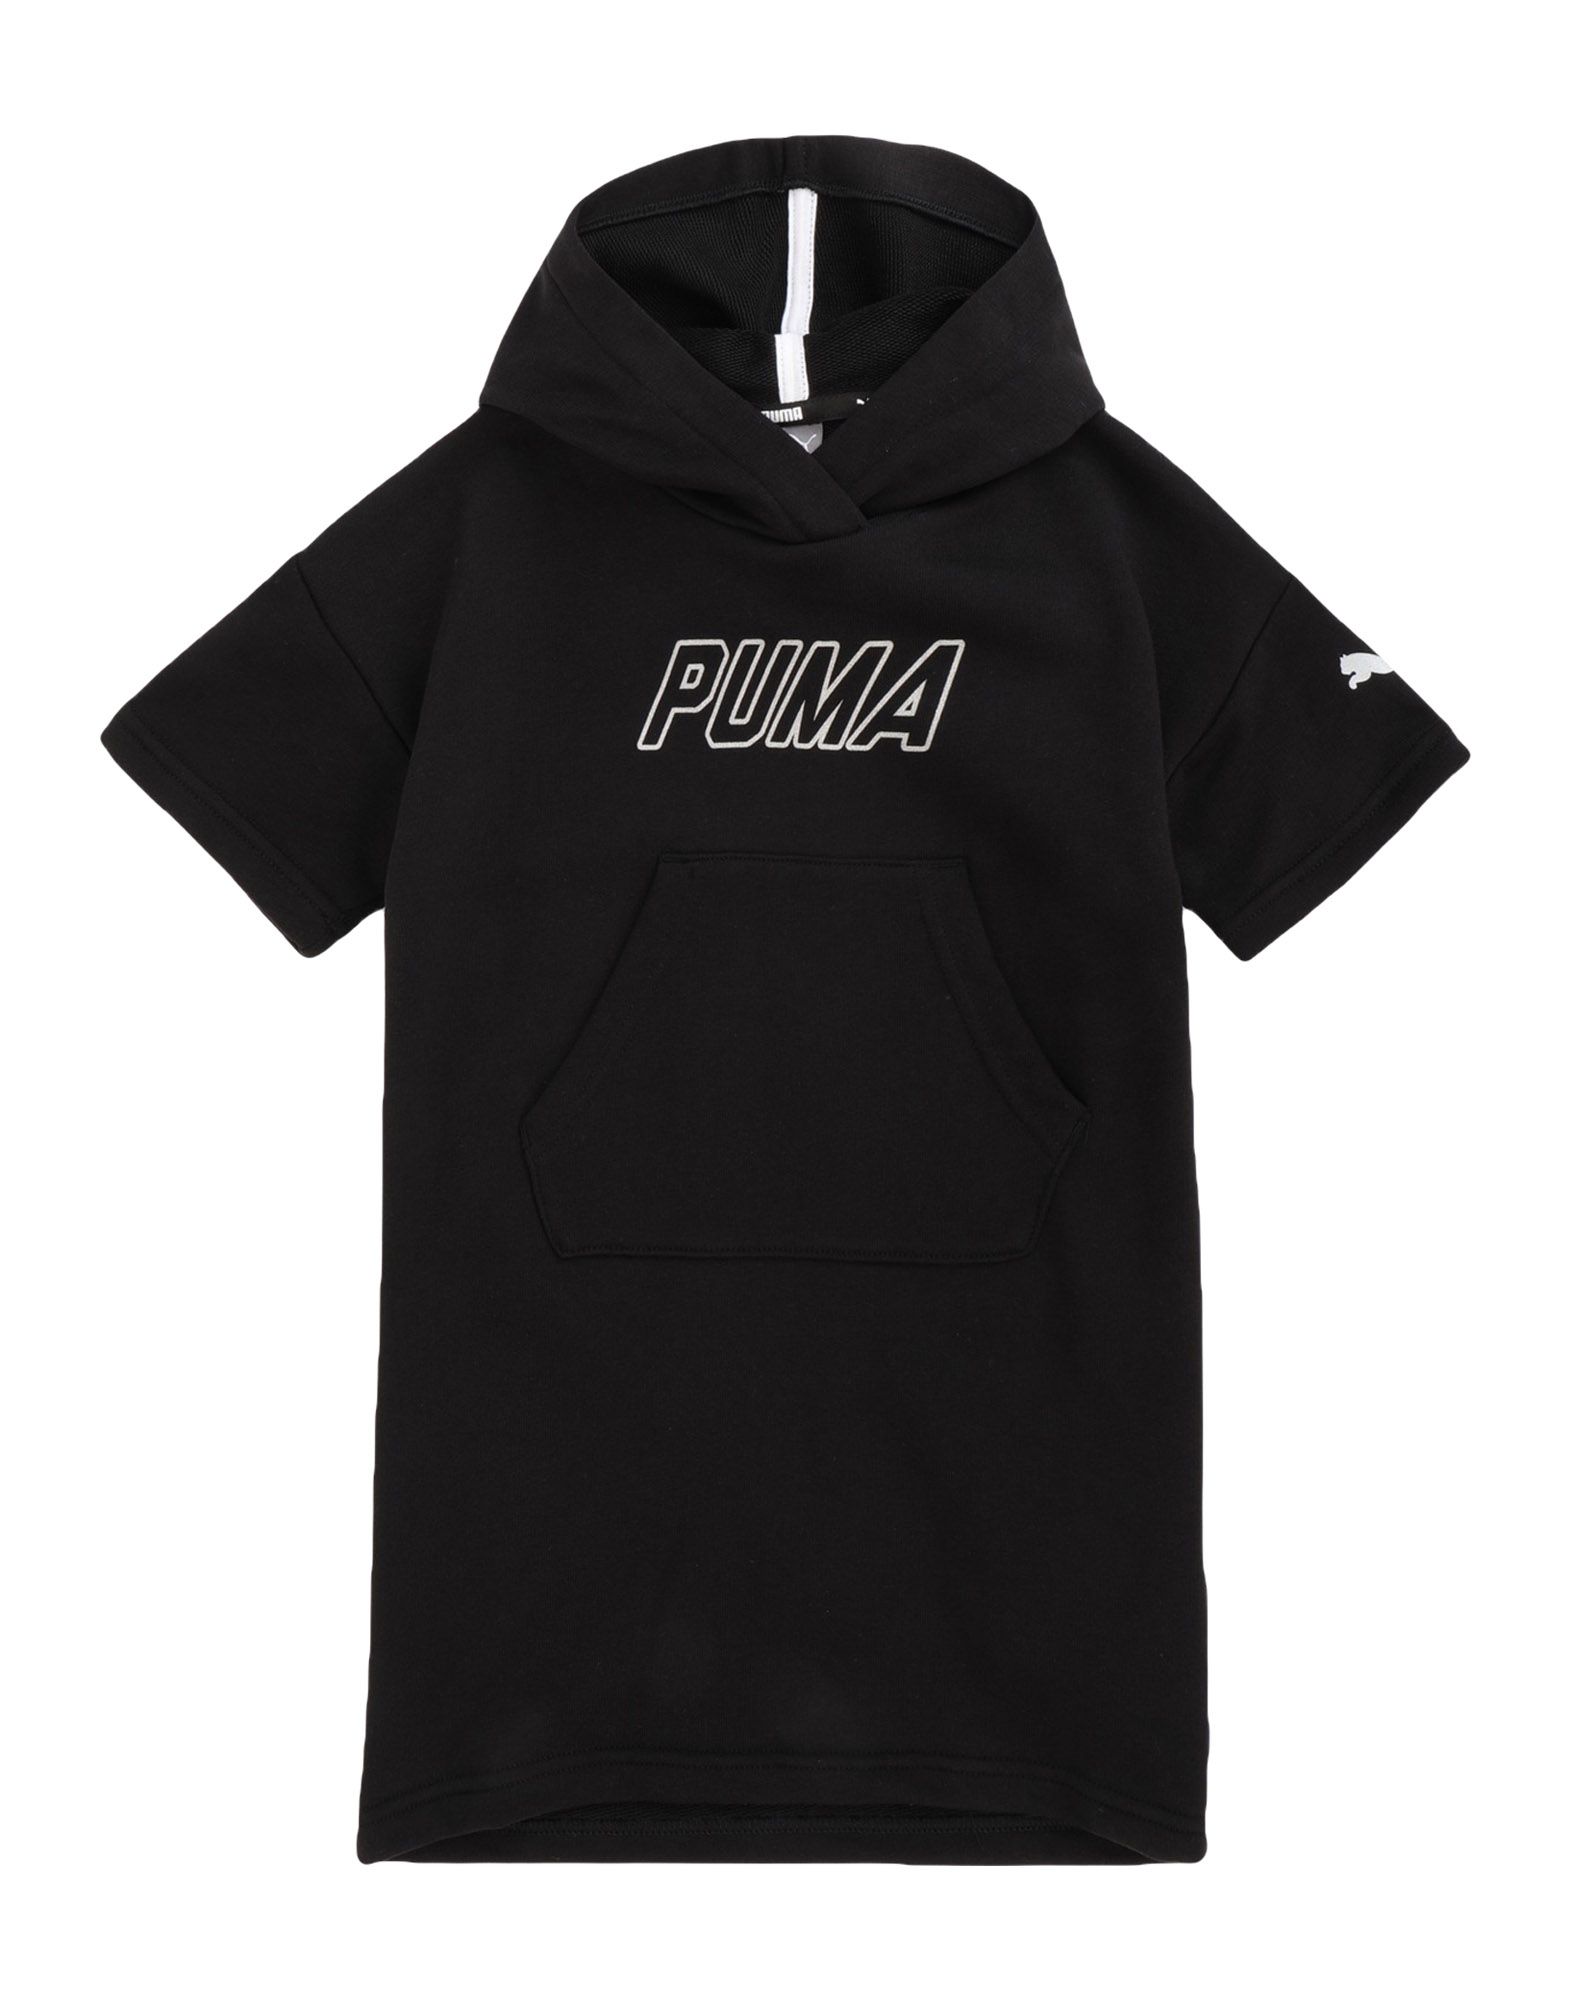 puma clothing online